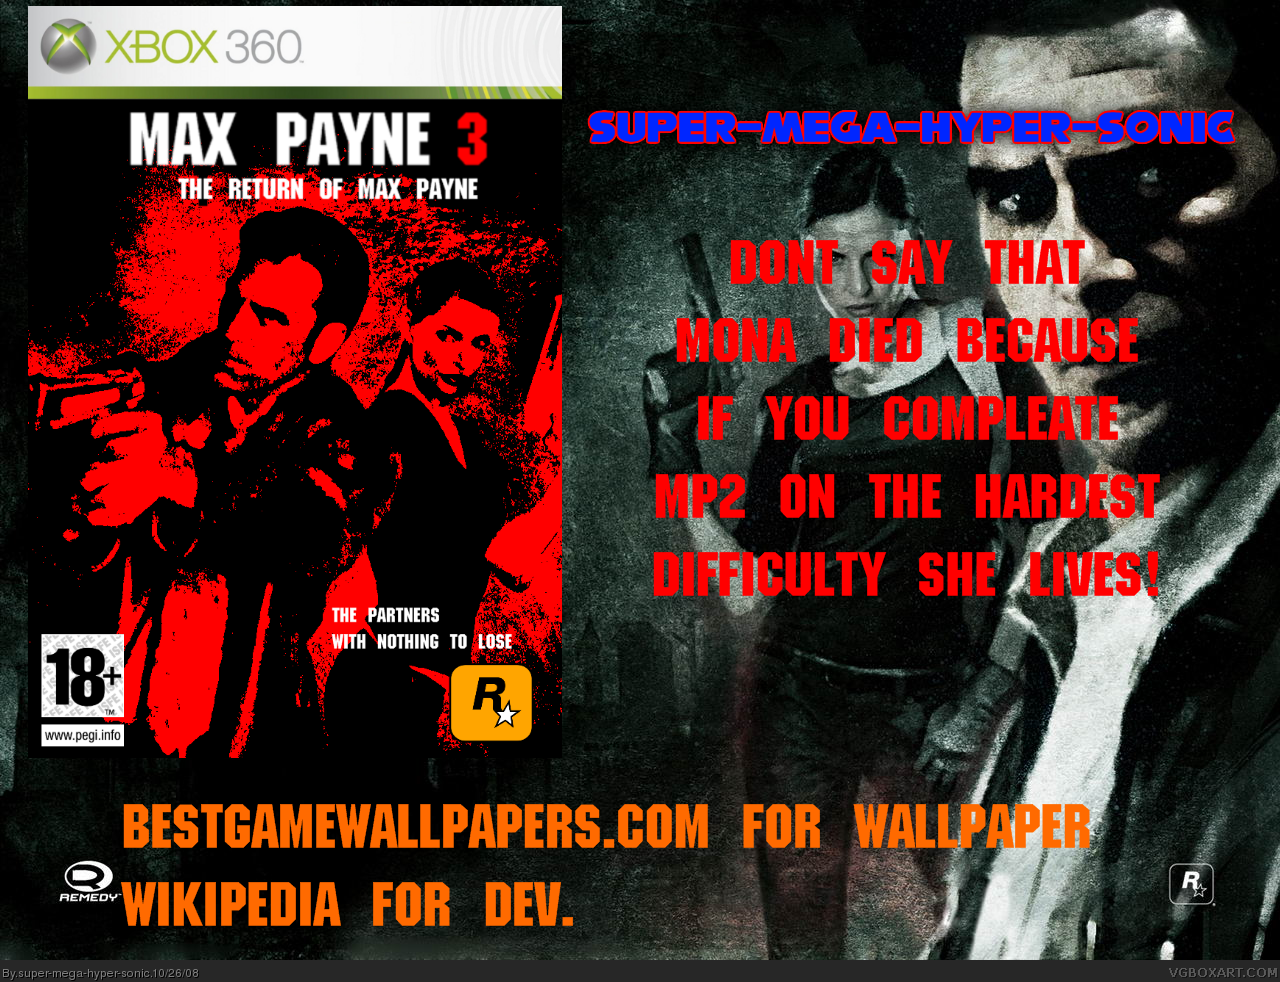 Max Payne 3: The Return of Max Payne box cover